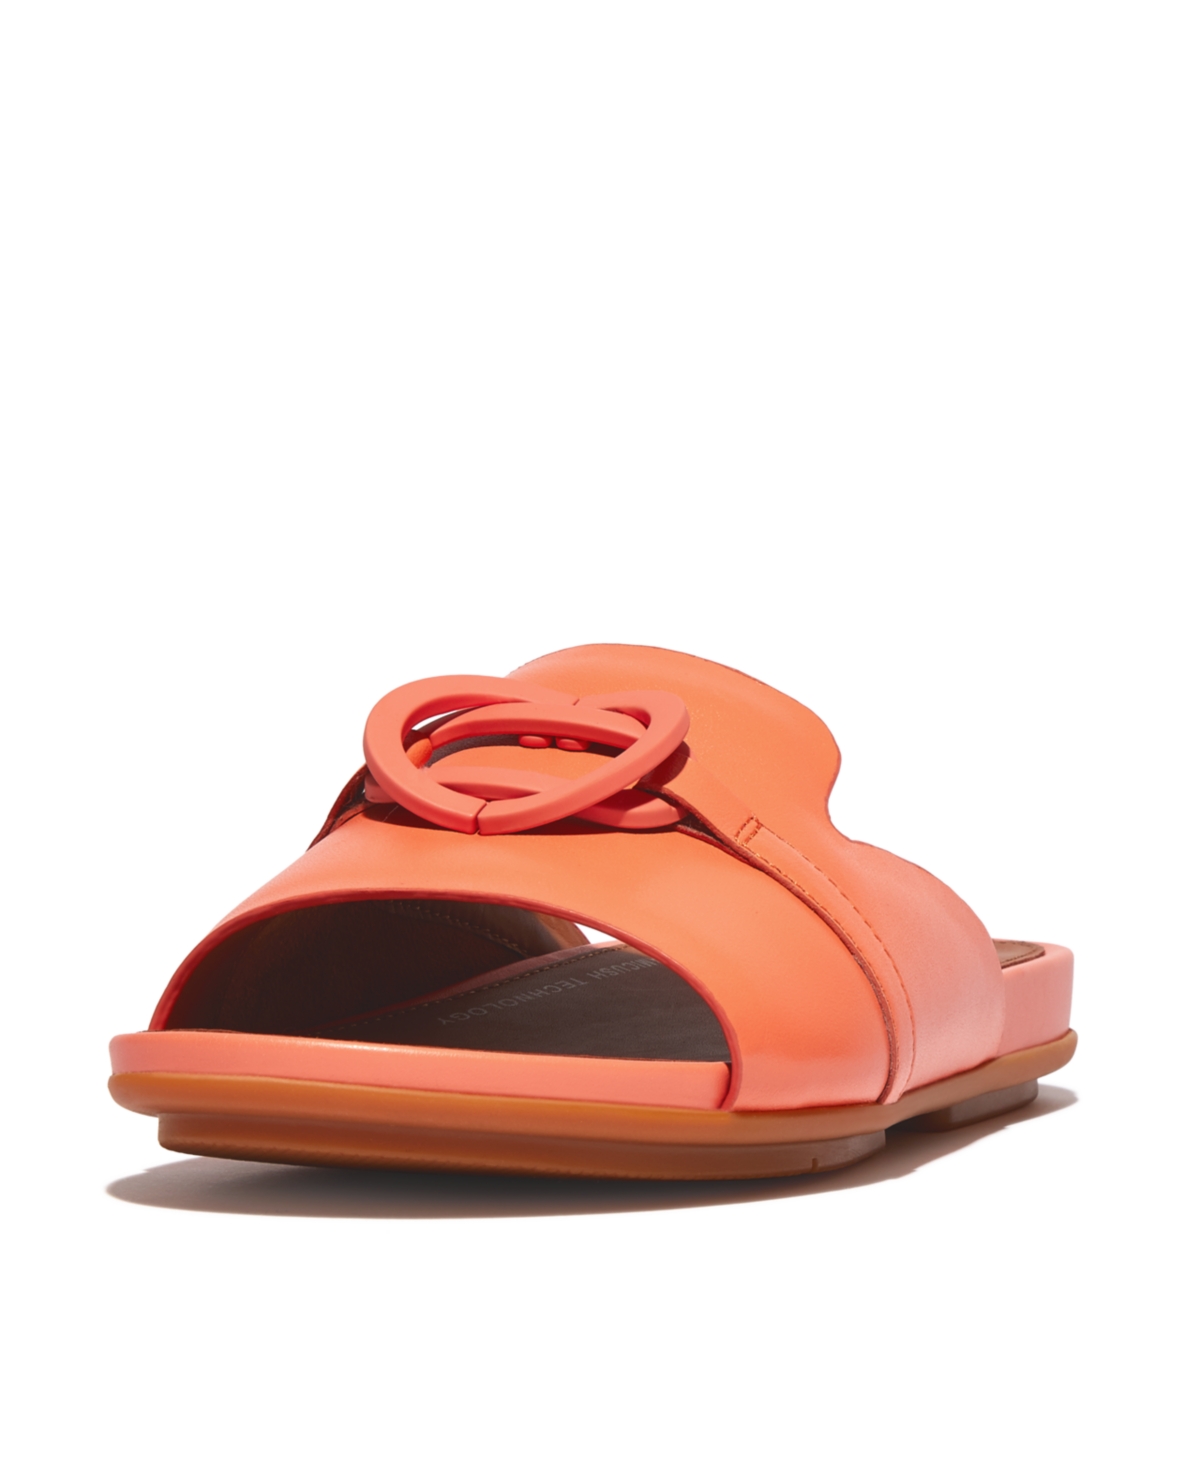 FitFlop Women's Gracie Rubber Circlet Leather Slides Sandal Women's Shoes